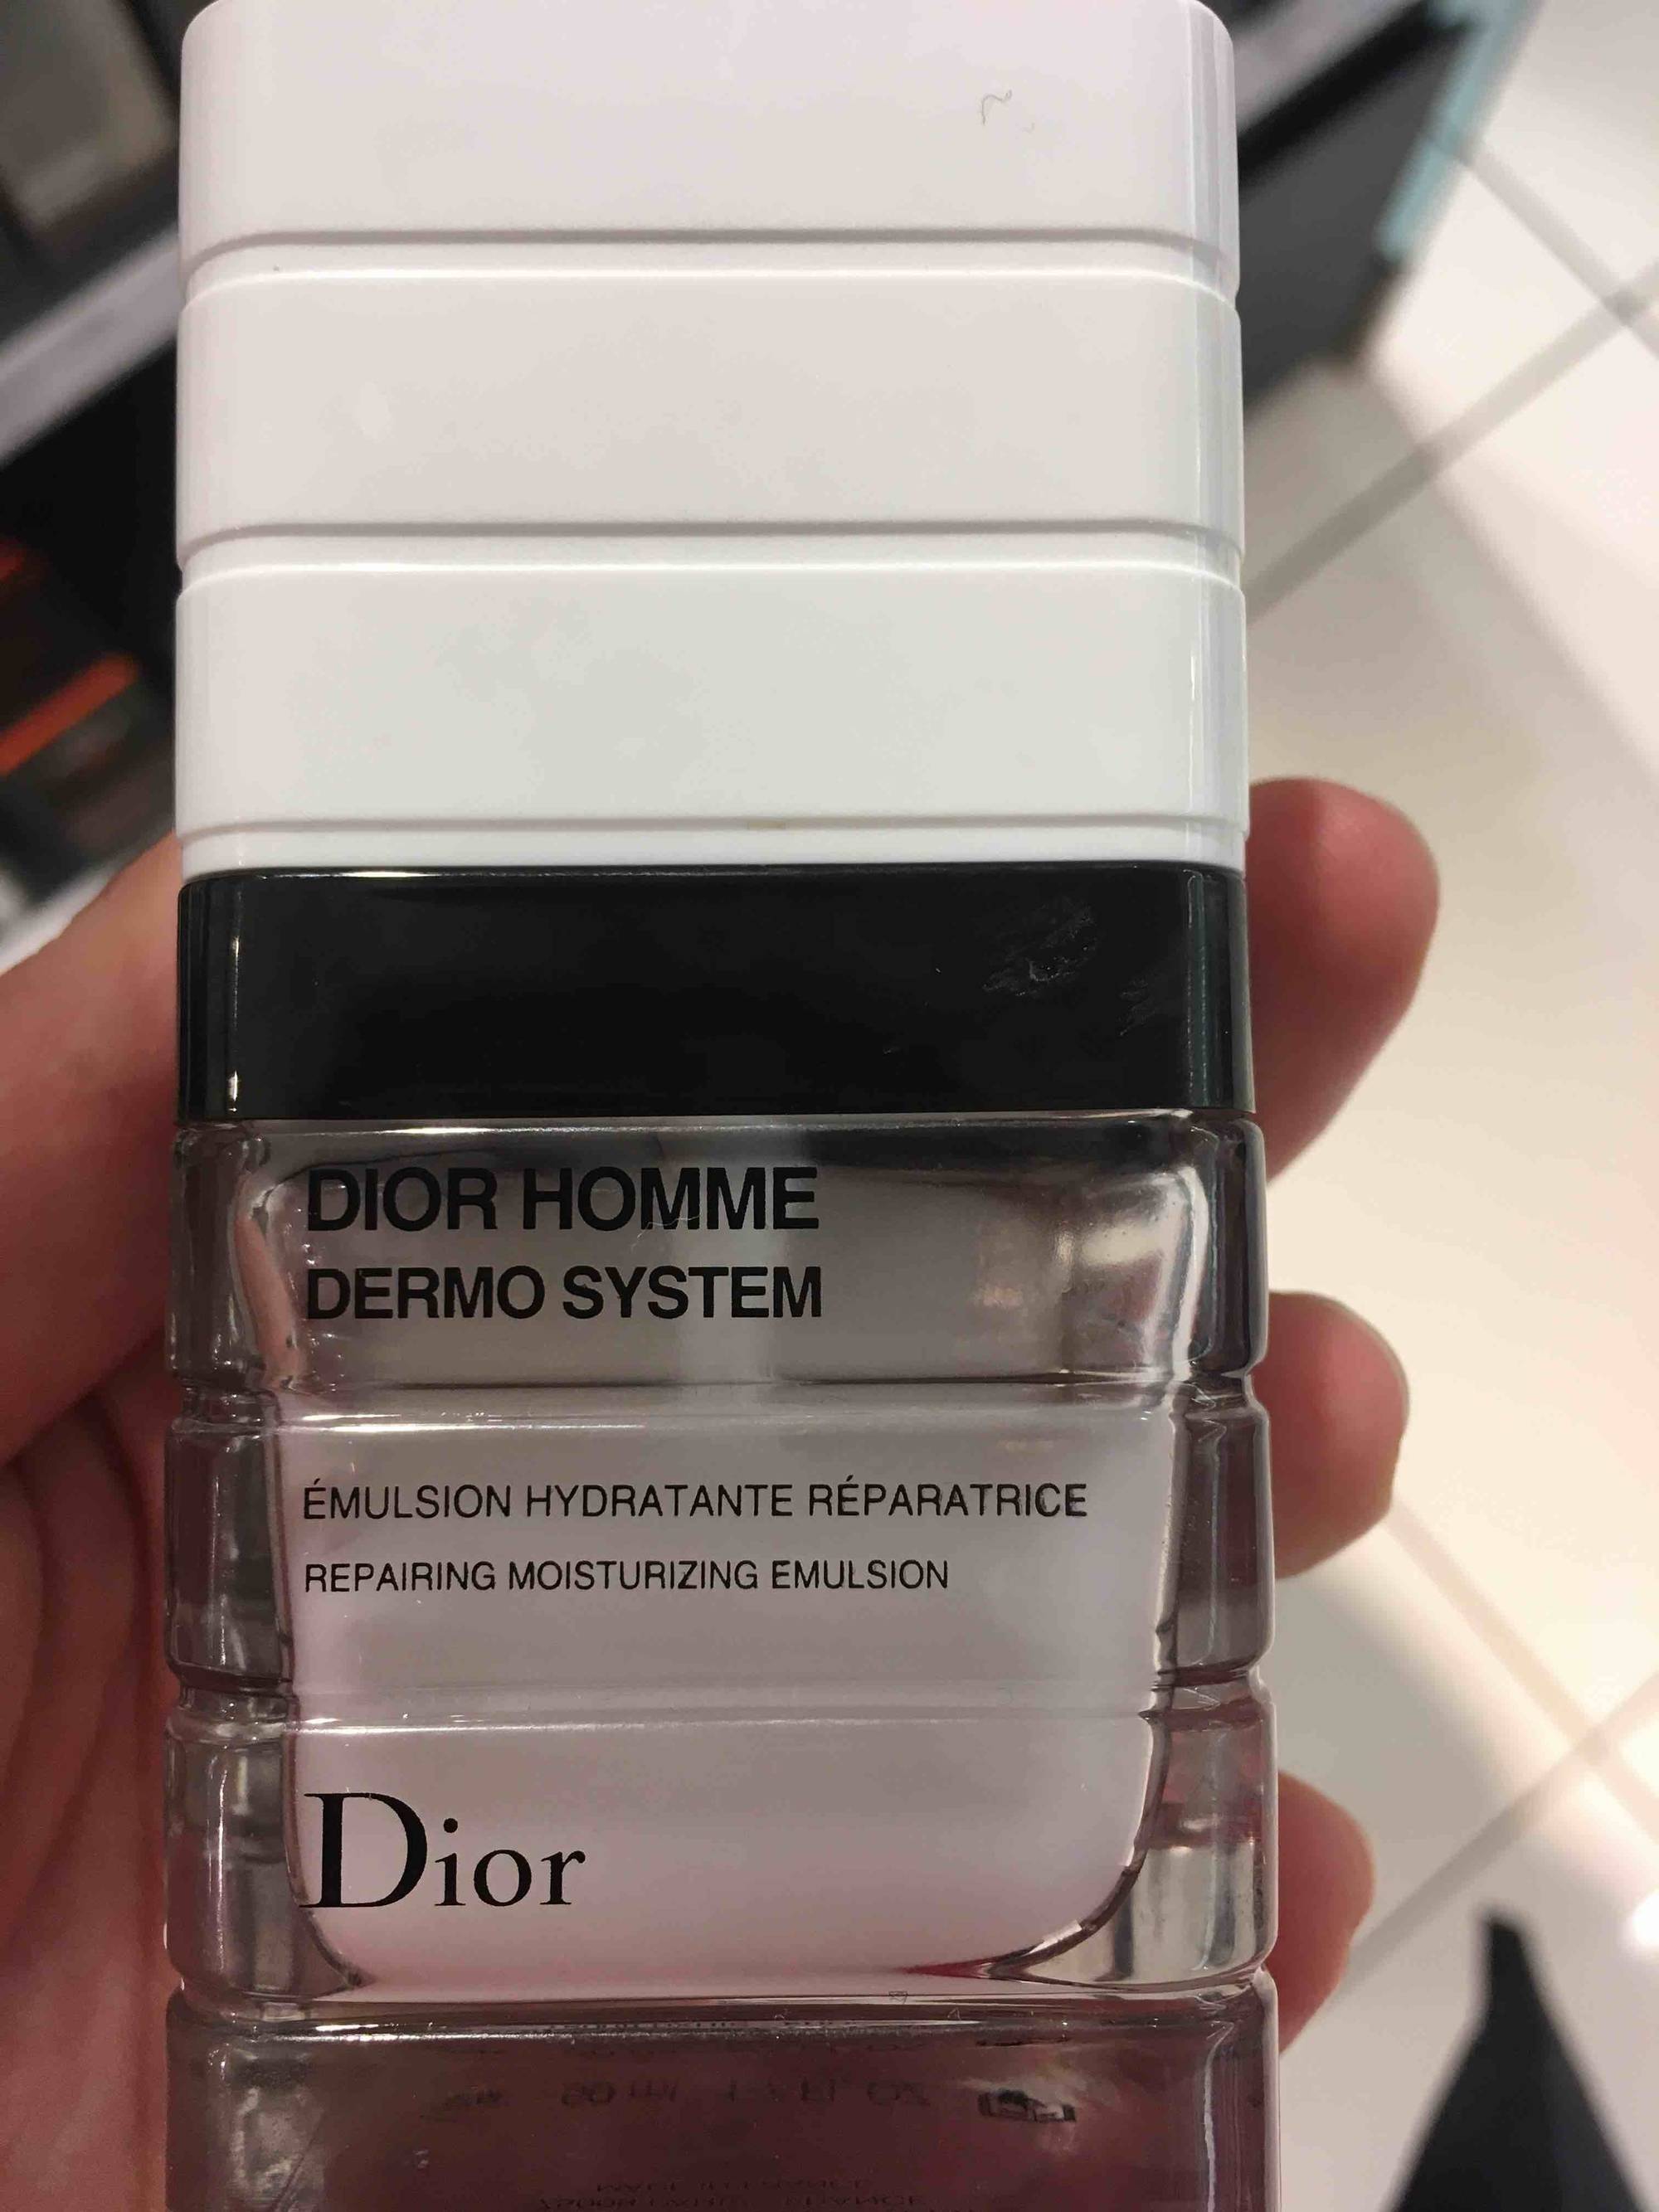 DIOR - Dior homme dermo system - Emulsion hydratante